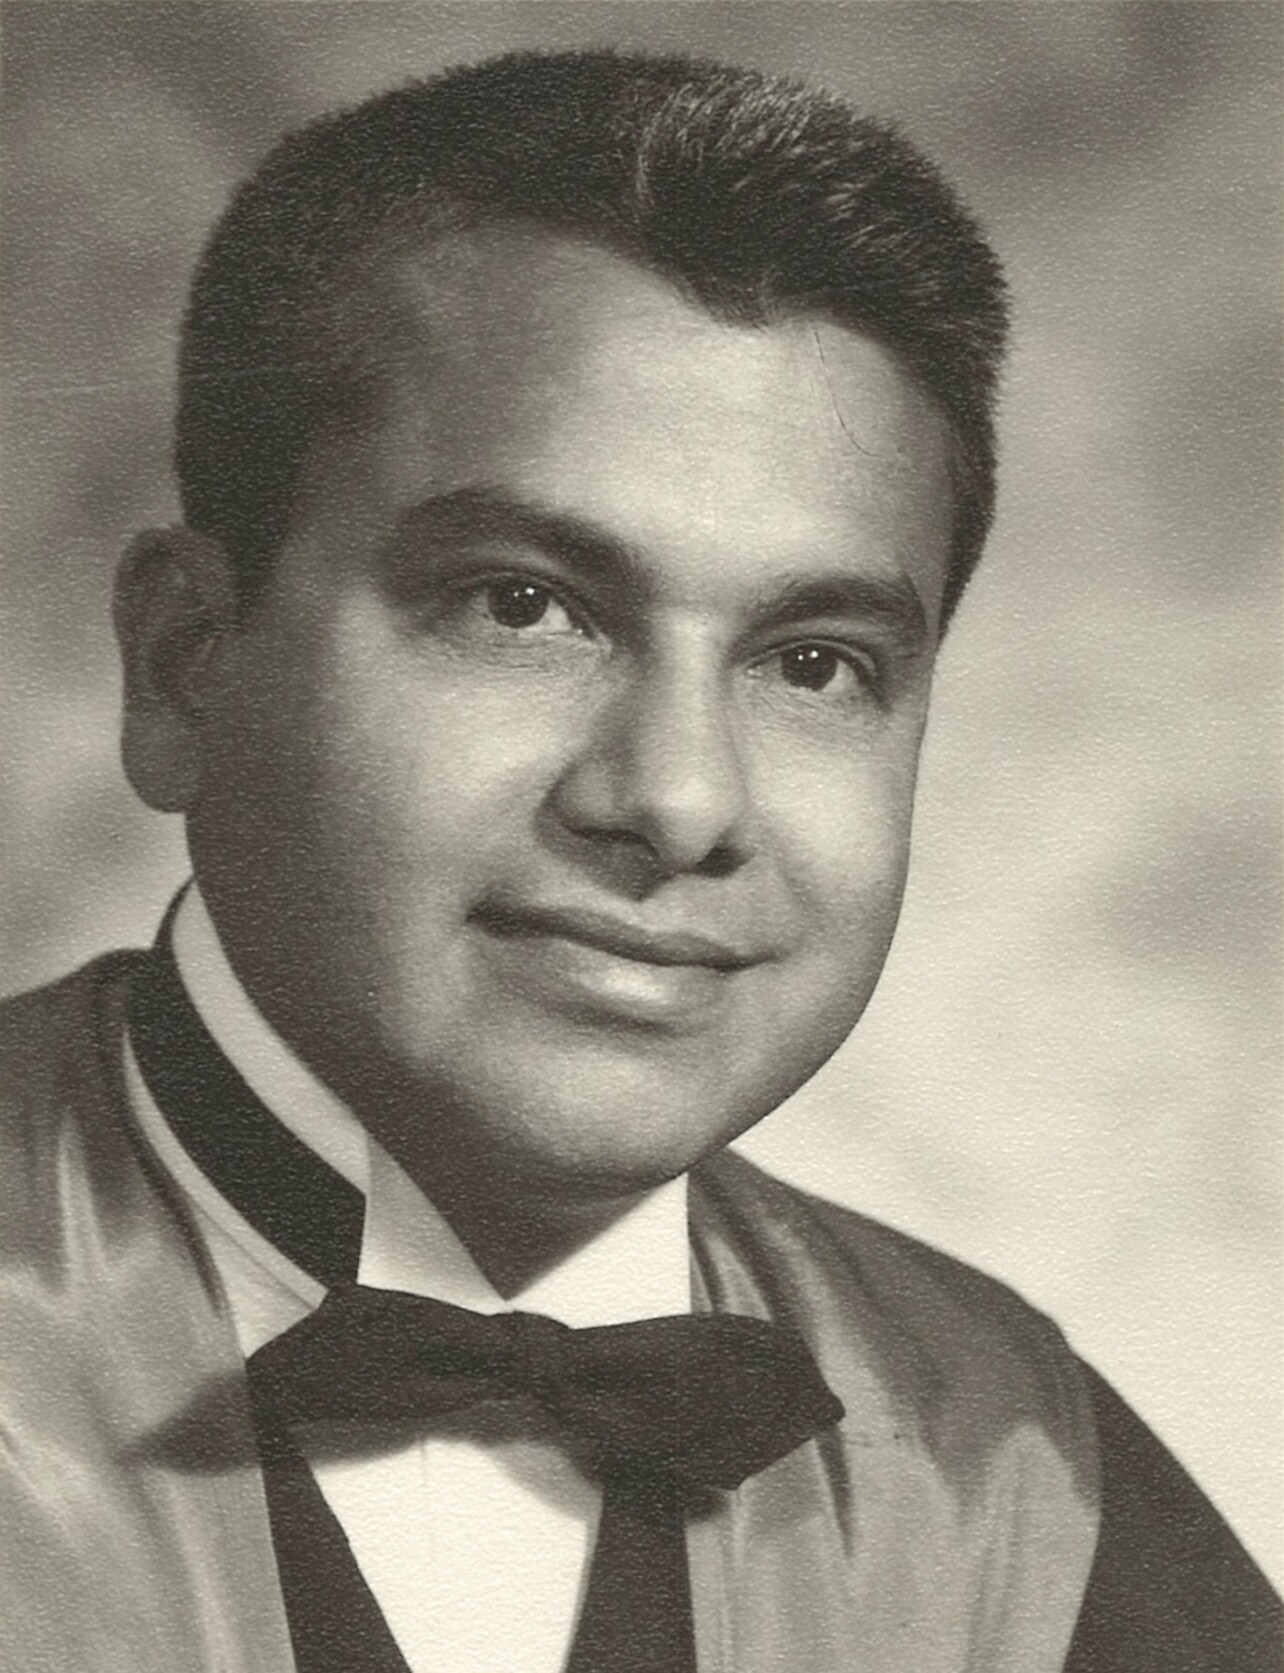 Mr. Ray Keshwar